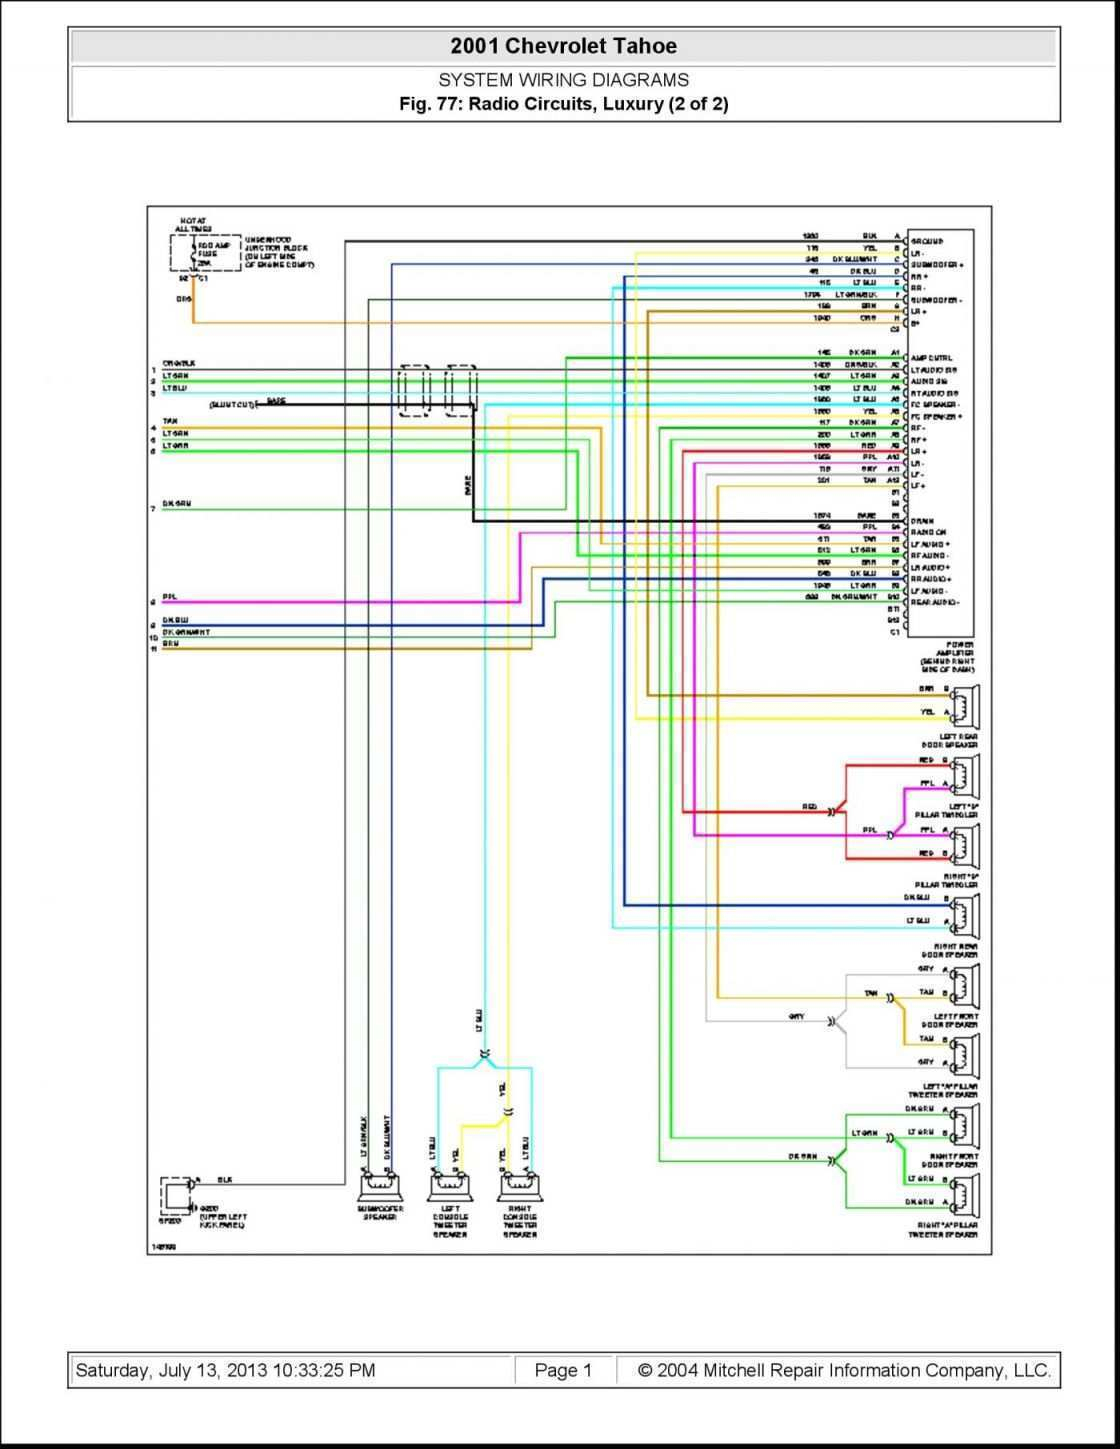 Resistor Color Chart Lovely Subaru Wiring Diagram Color Codes Best - Subaru Wiring Diagram Color Codes